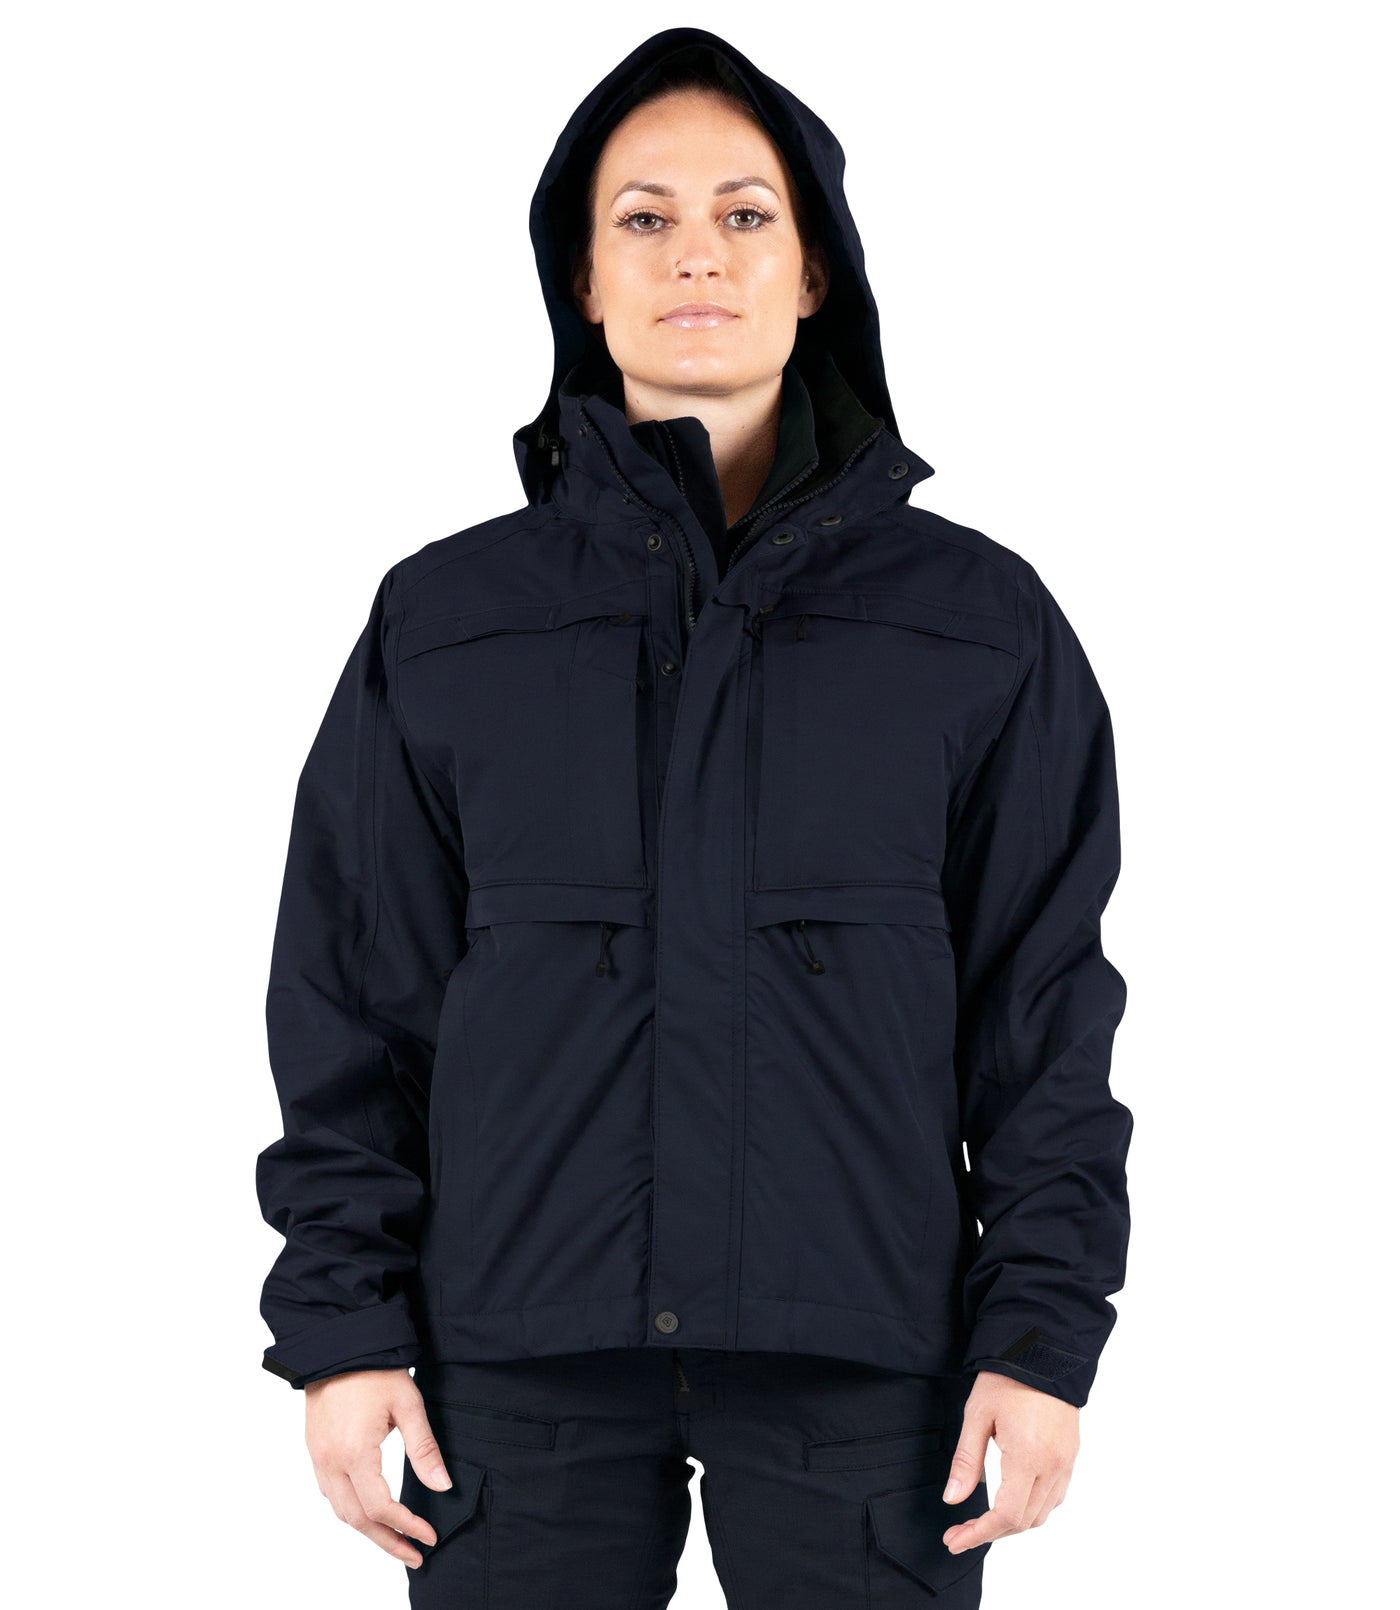 Front Hood of Women’s Tactix System Jacket in Midnight Navy